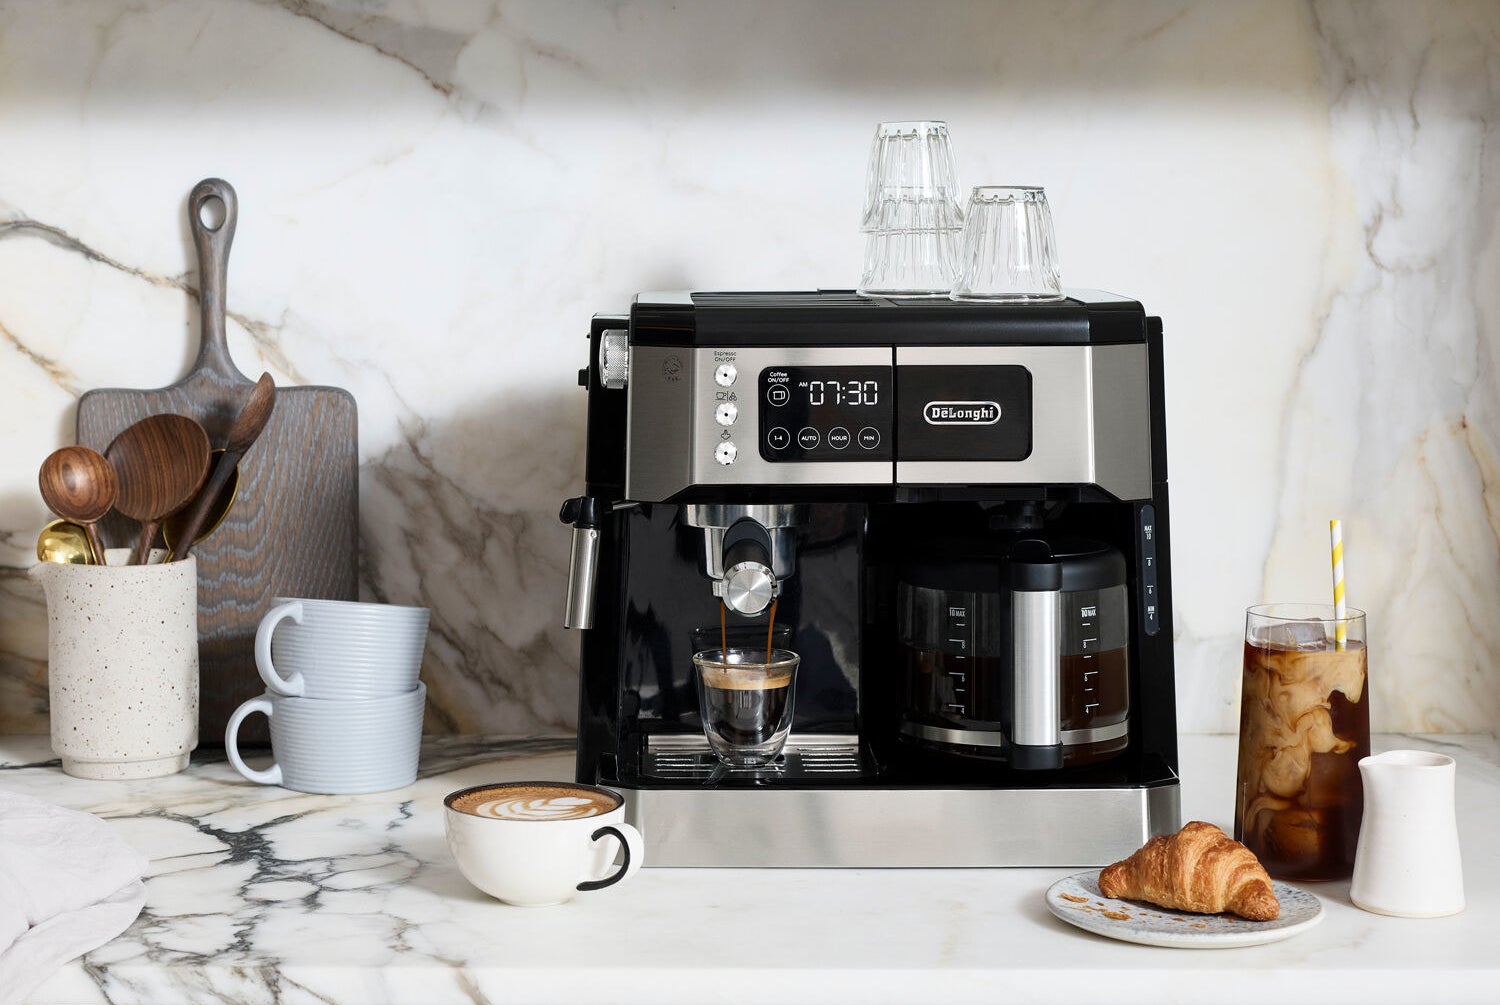 The all-in-one combination coffee and espresso machine